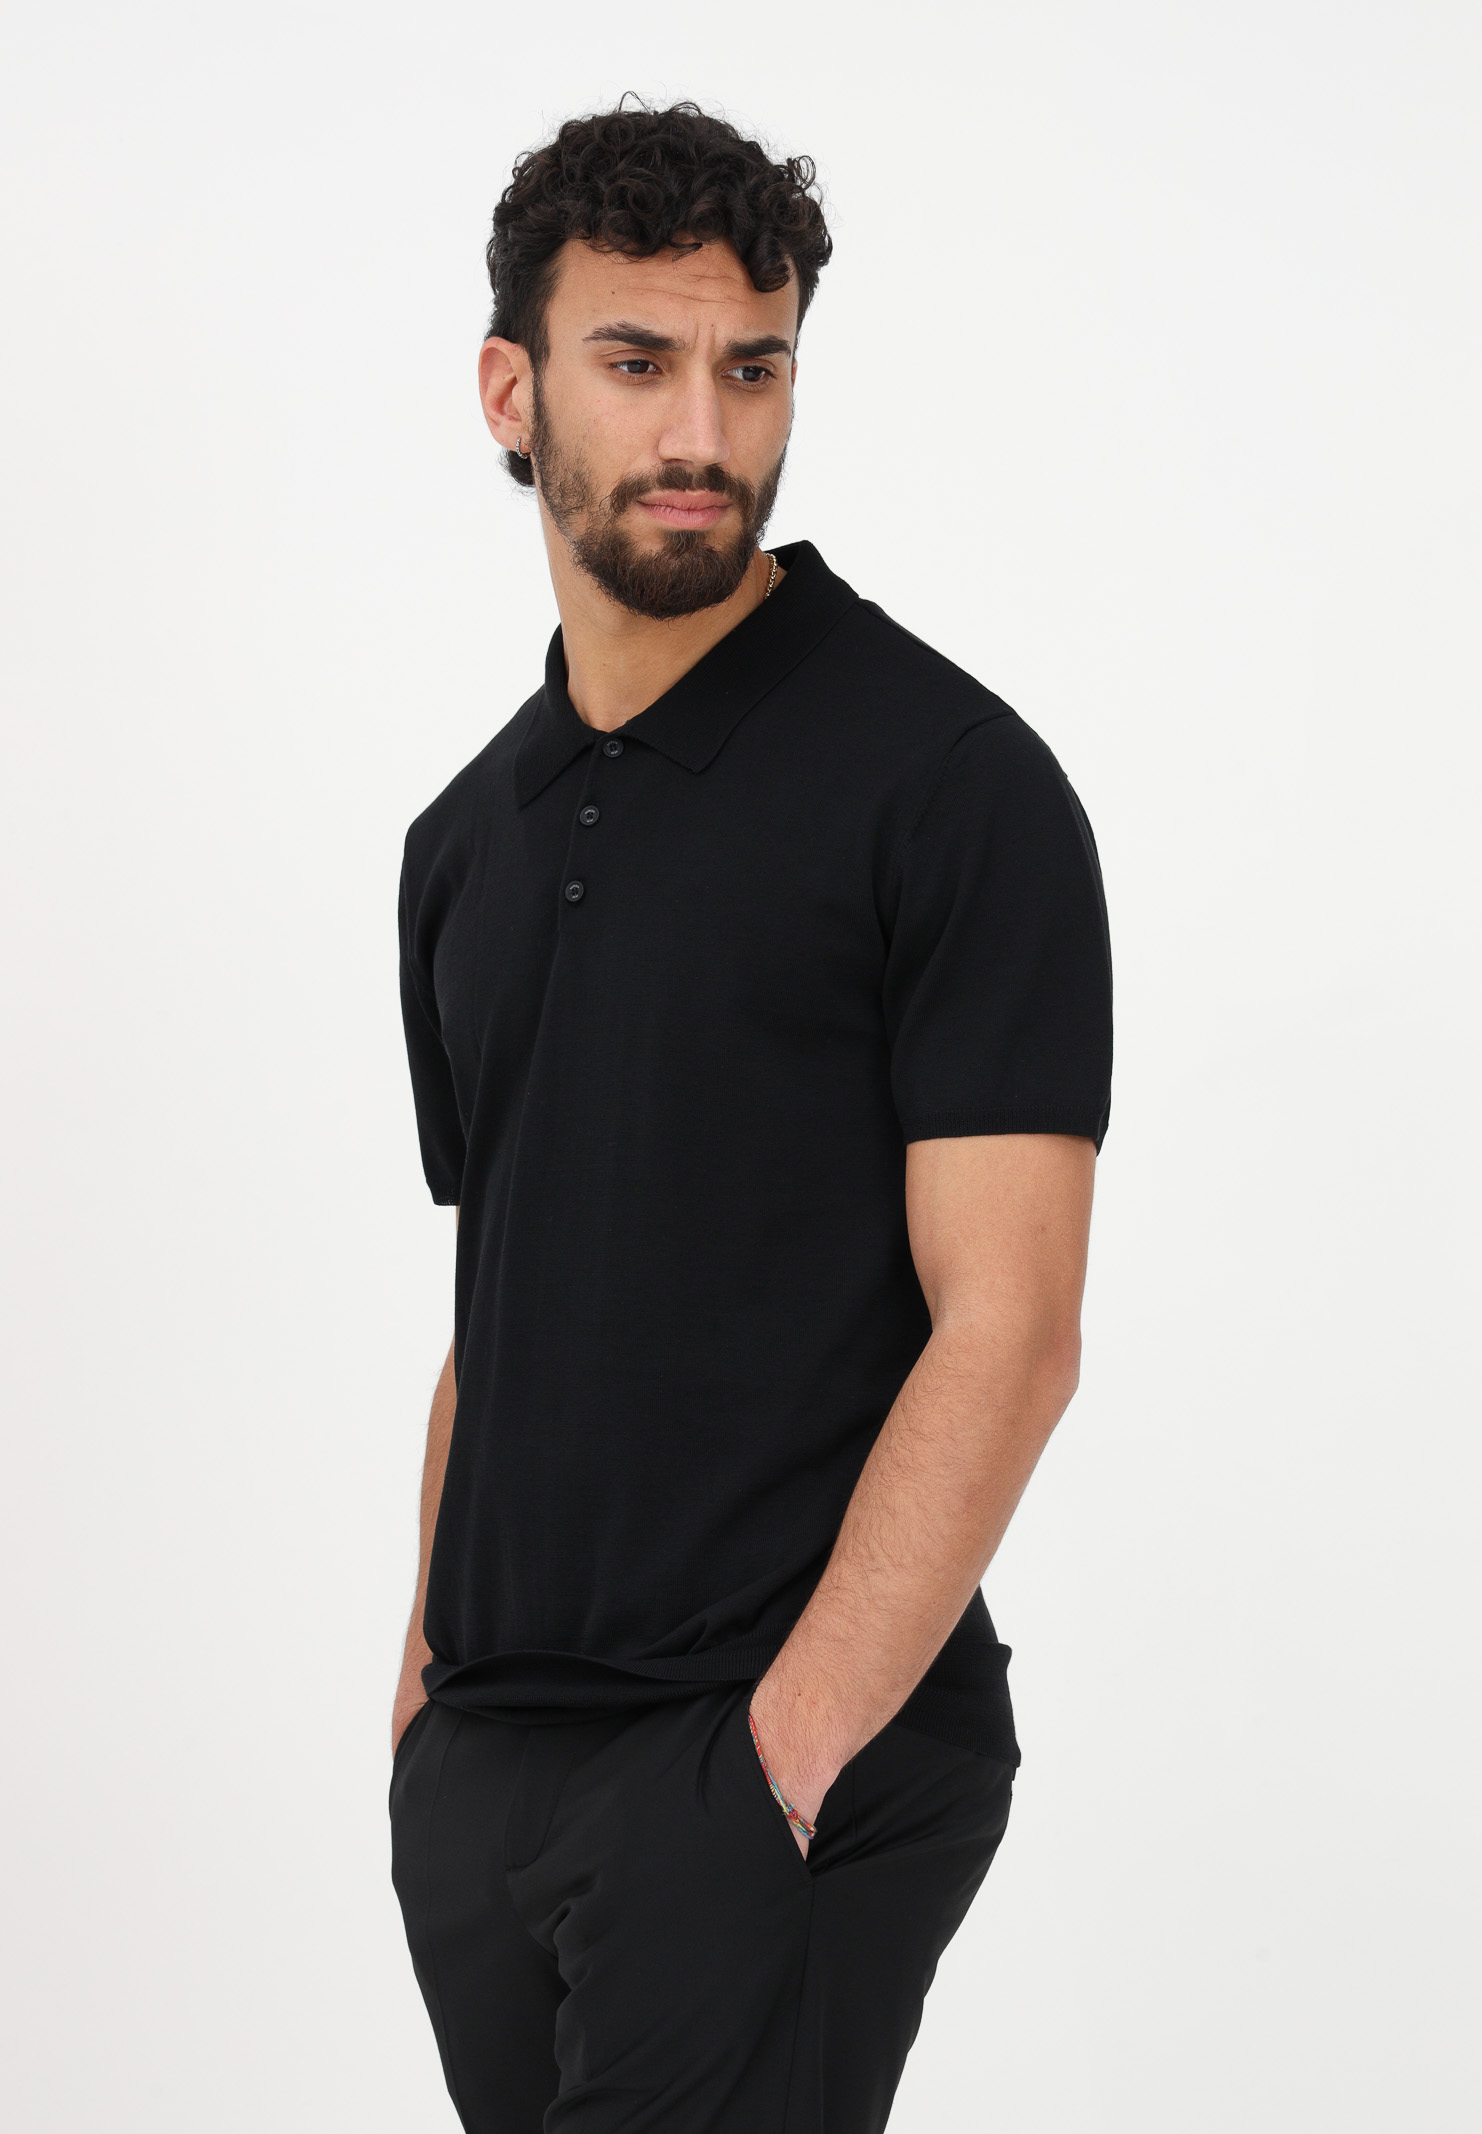 Black polo shirt for men - PATRIZIA PEPE - Pavidas